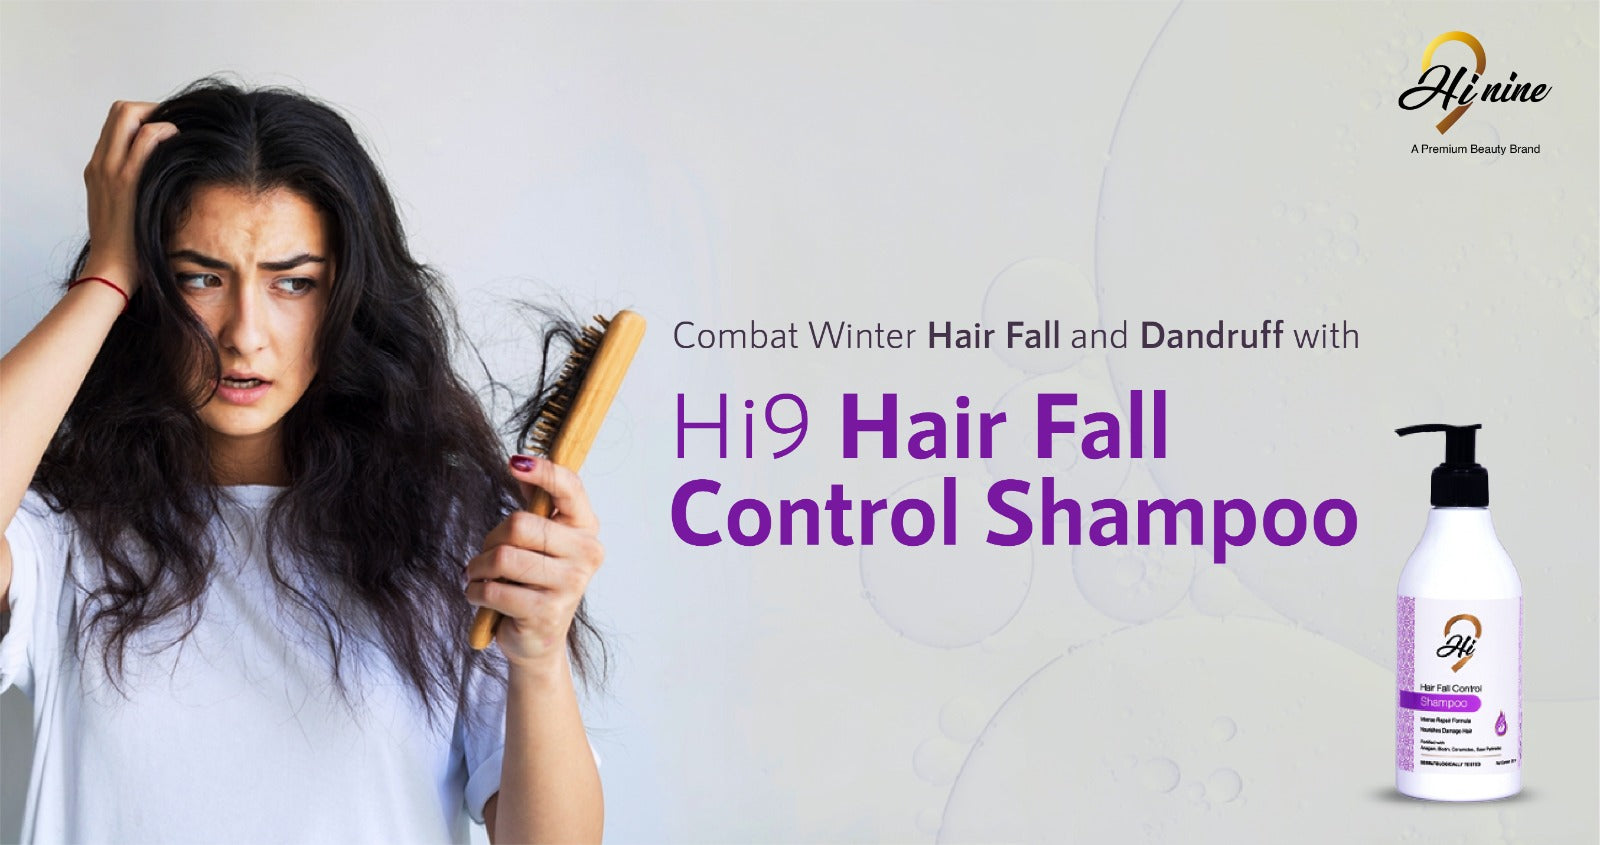 Combat Winter Hair Fall and Dandruff with Hi9 Hair Fall Control Shampoo